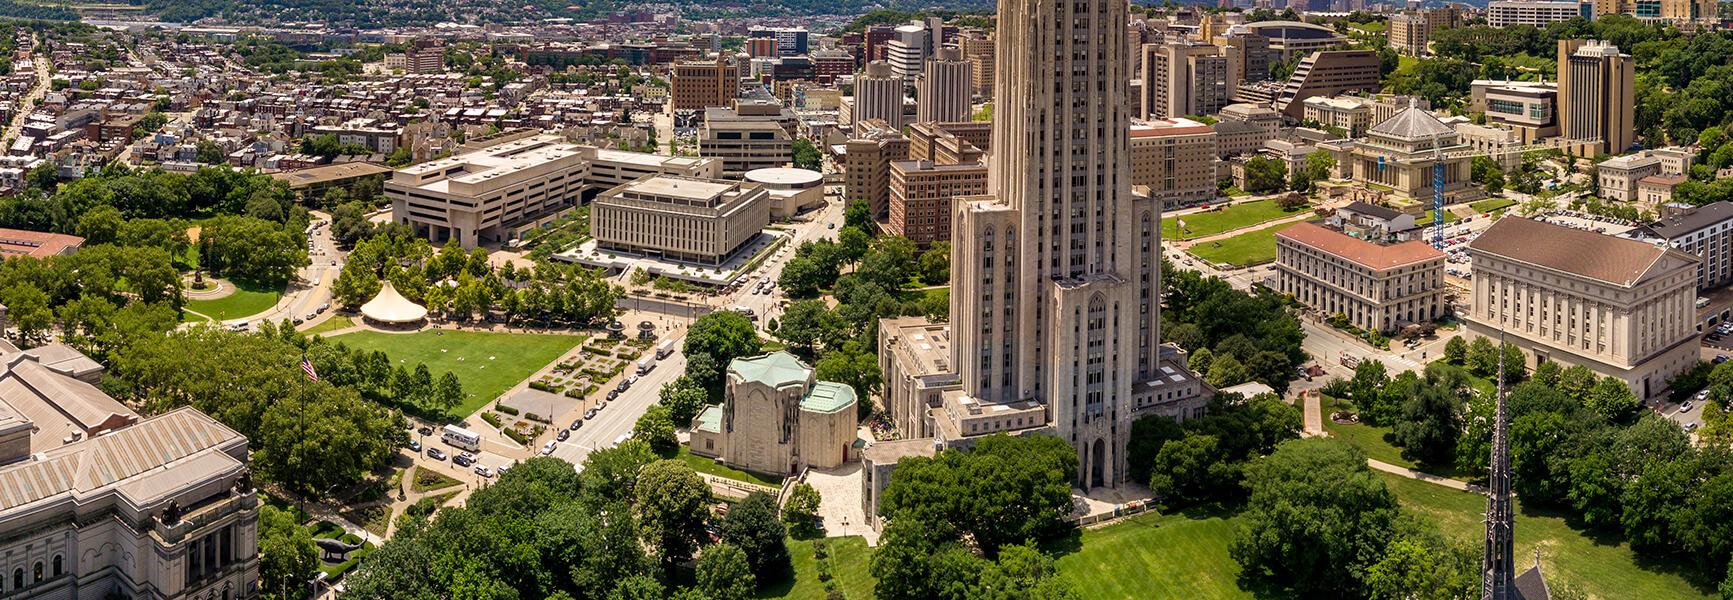 Panorama of the University of Pittsburgh Main Campus